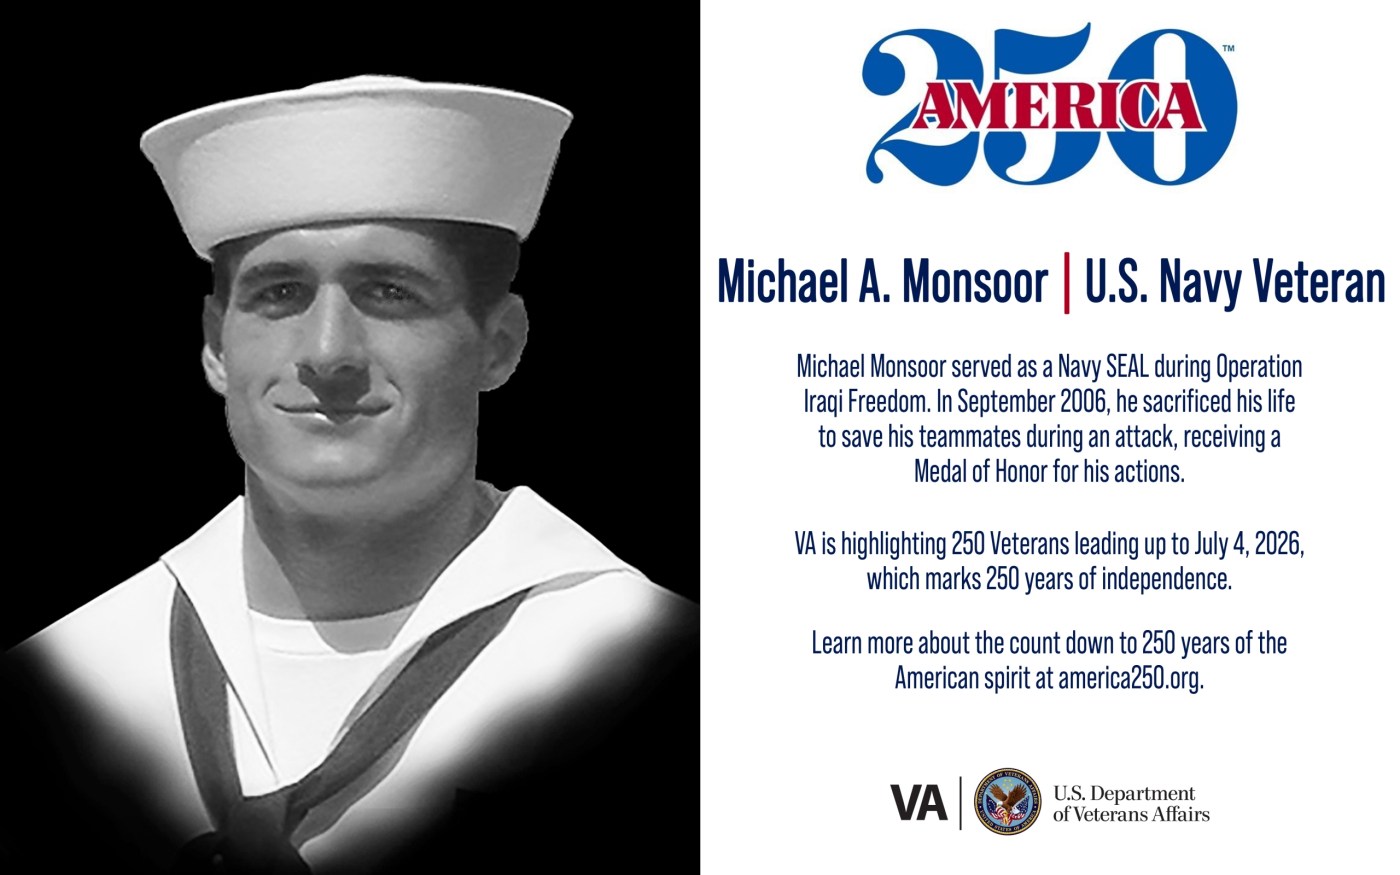 America250: Navy Veteran Michael Monsoor